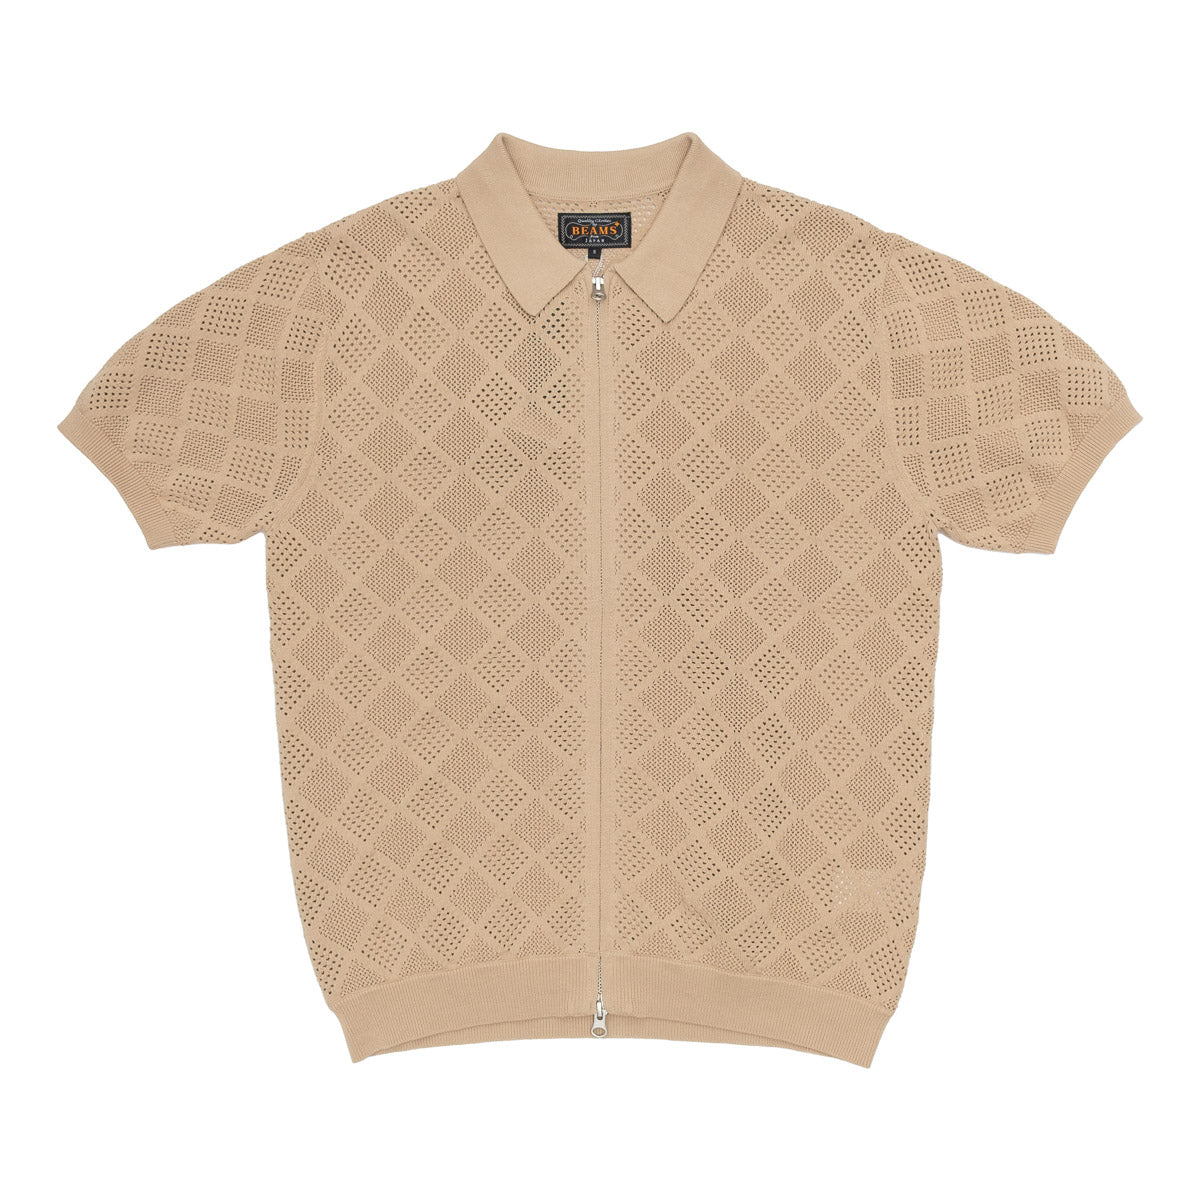 Buy Men's Mesh Knit Beige Polo T-Shirt Online